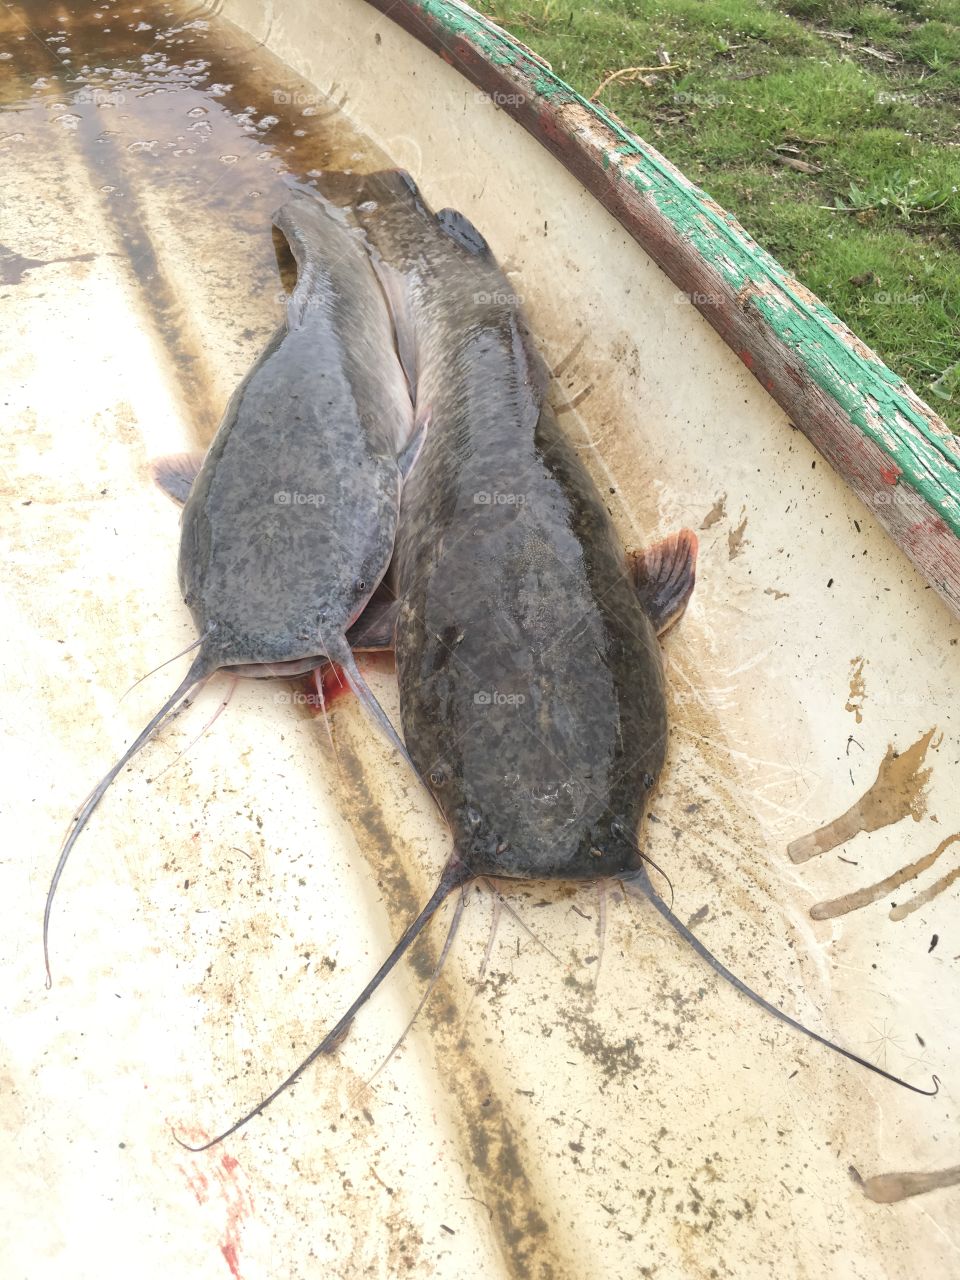 Two caught catfish